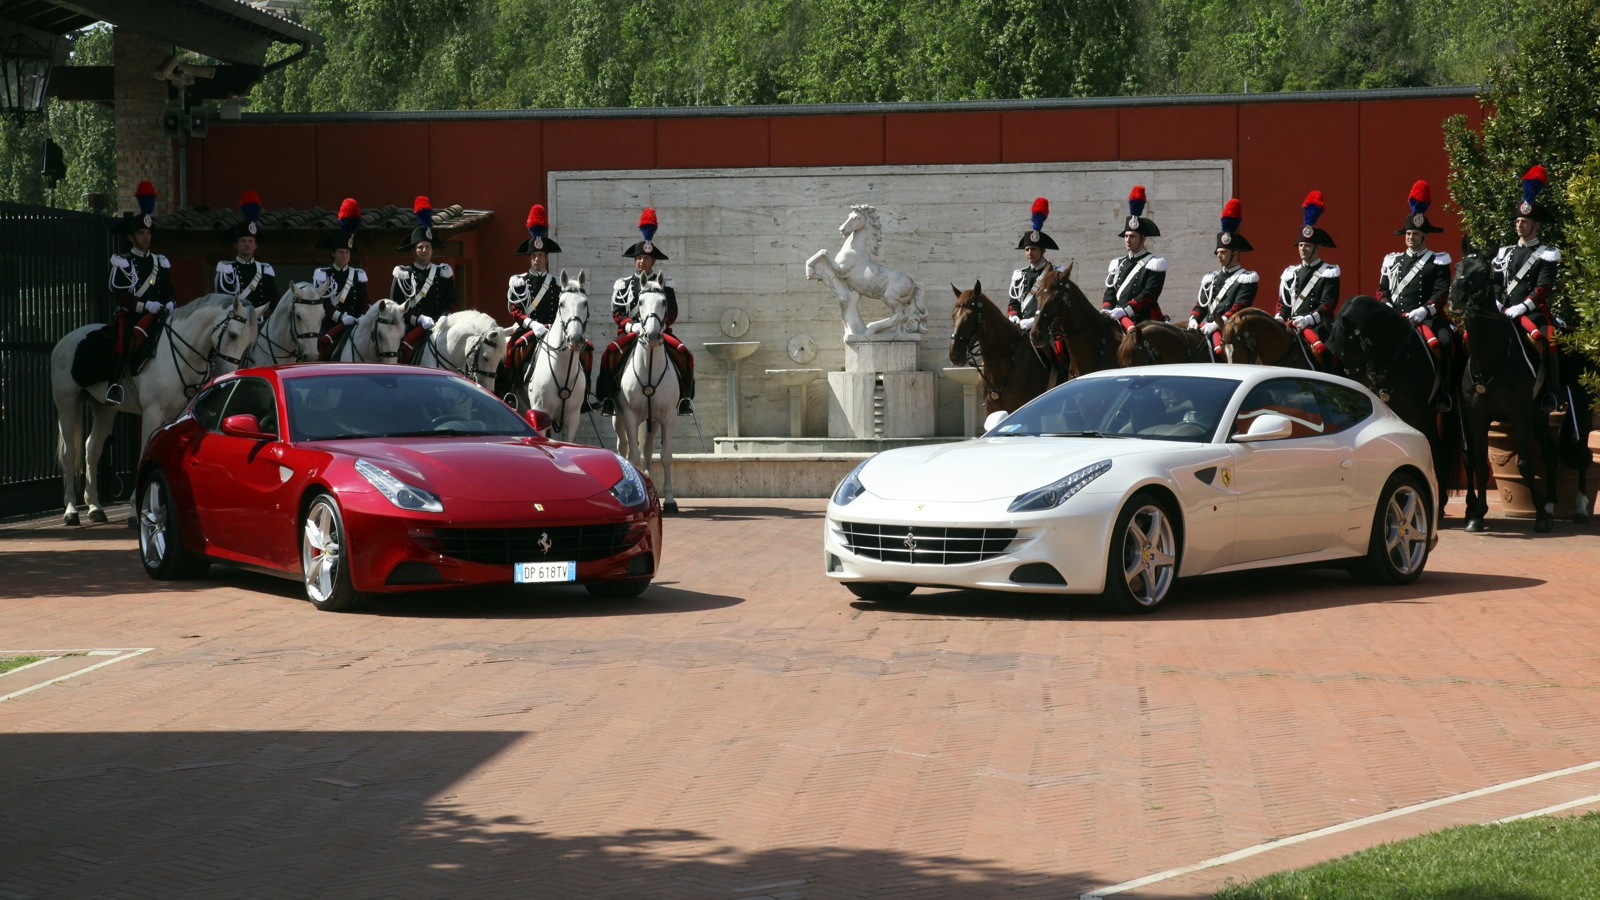 Ferrari salutes Queen Elizabeth II on her Diamond Jubilee.